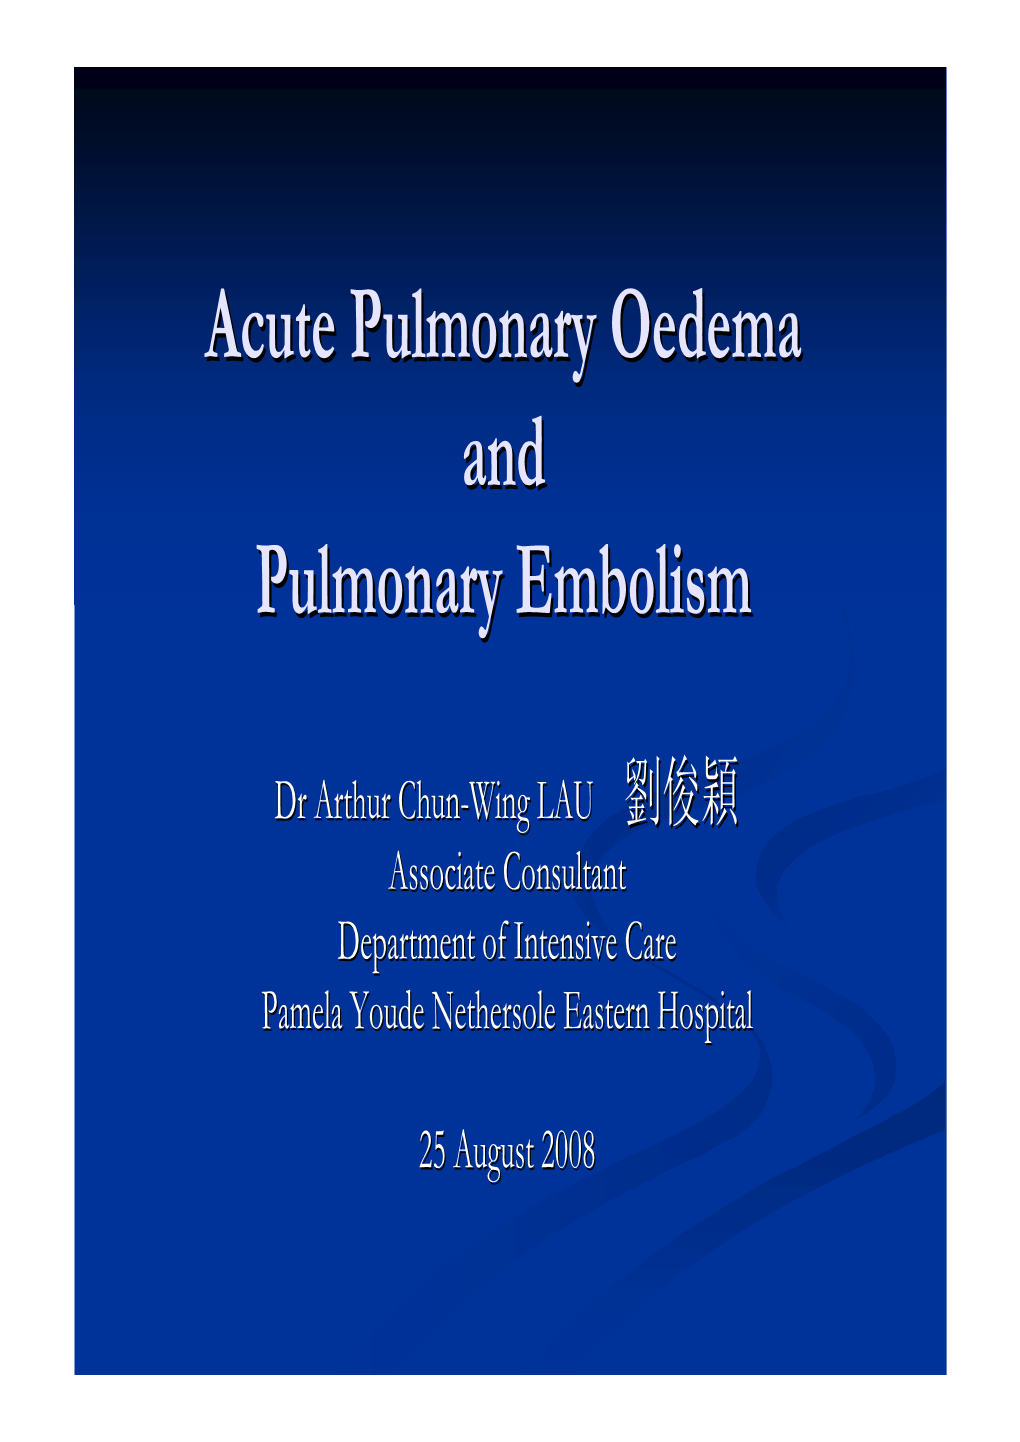 Acute Pulmonary Oedema and Pulmonary Embolism